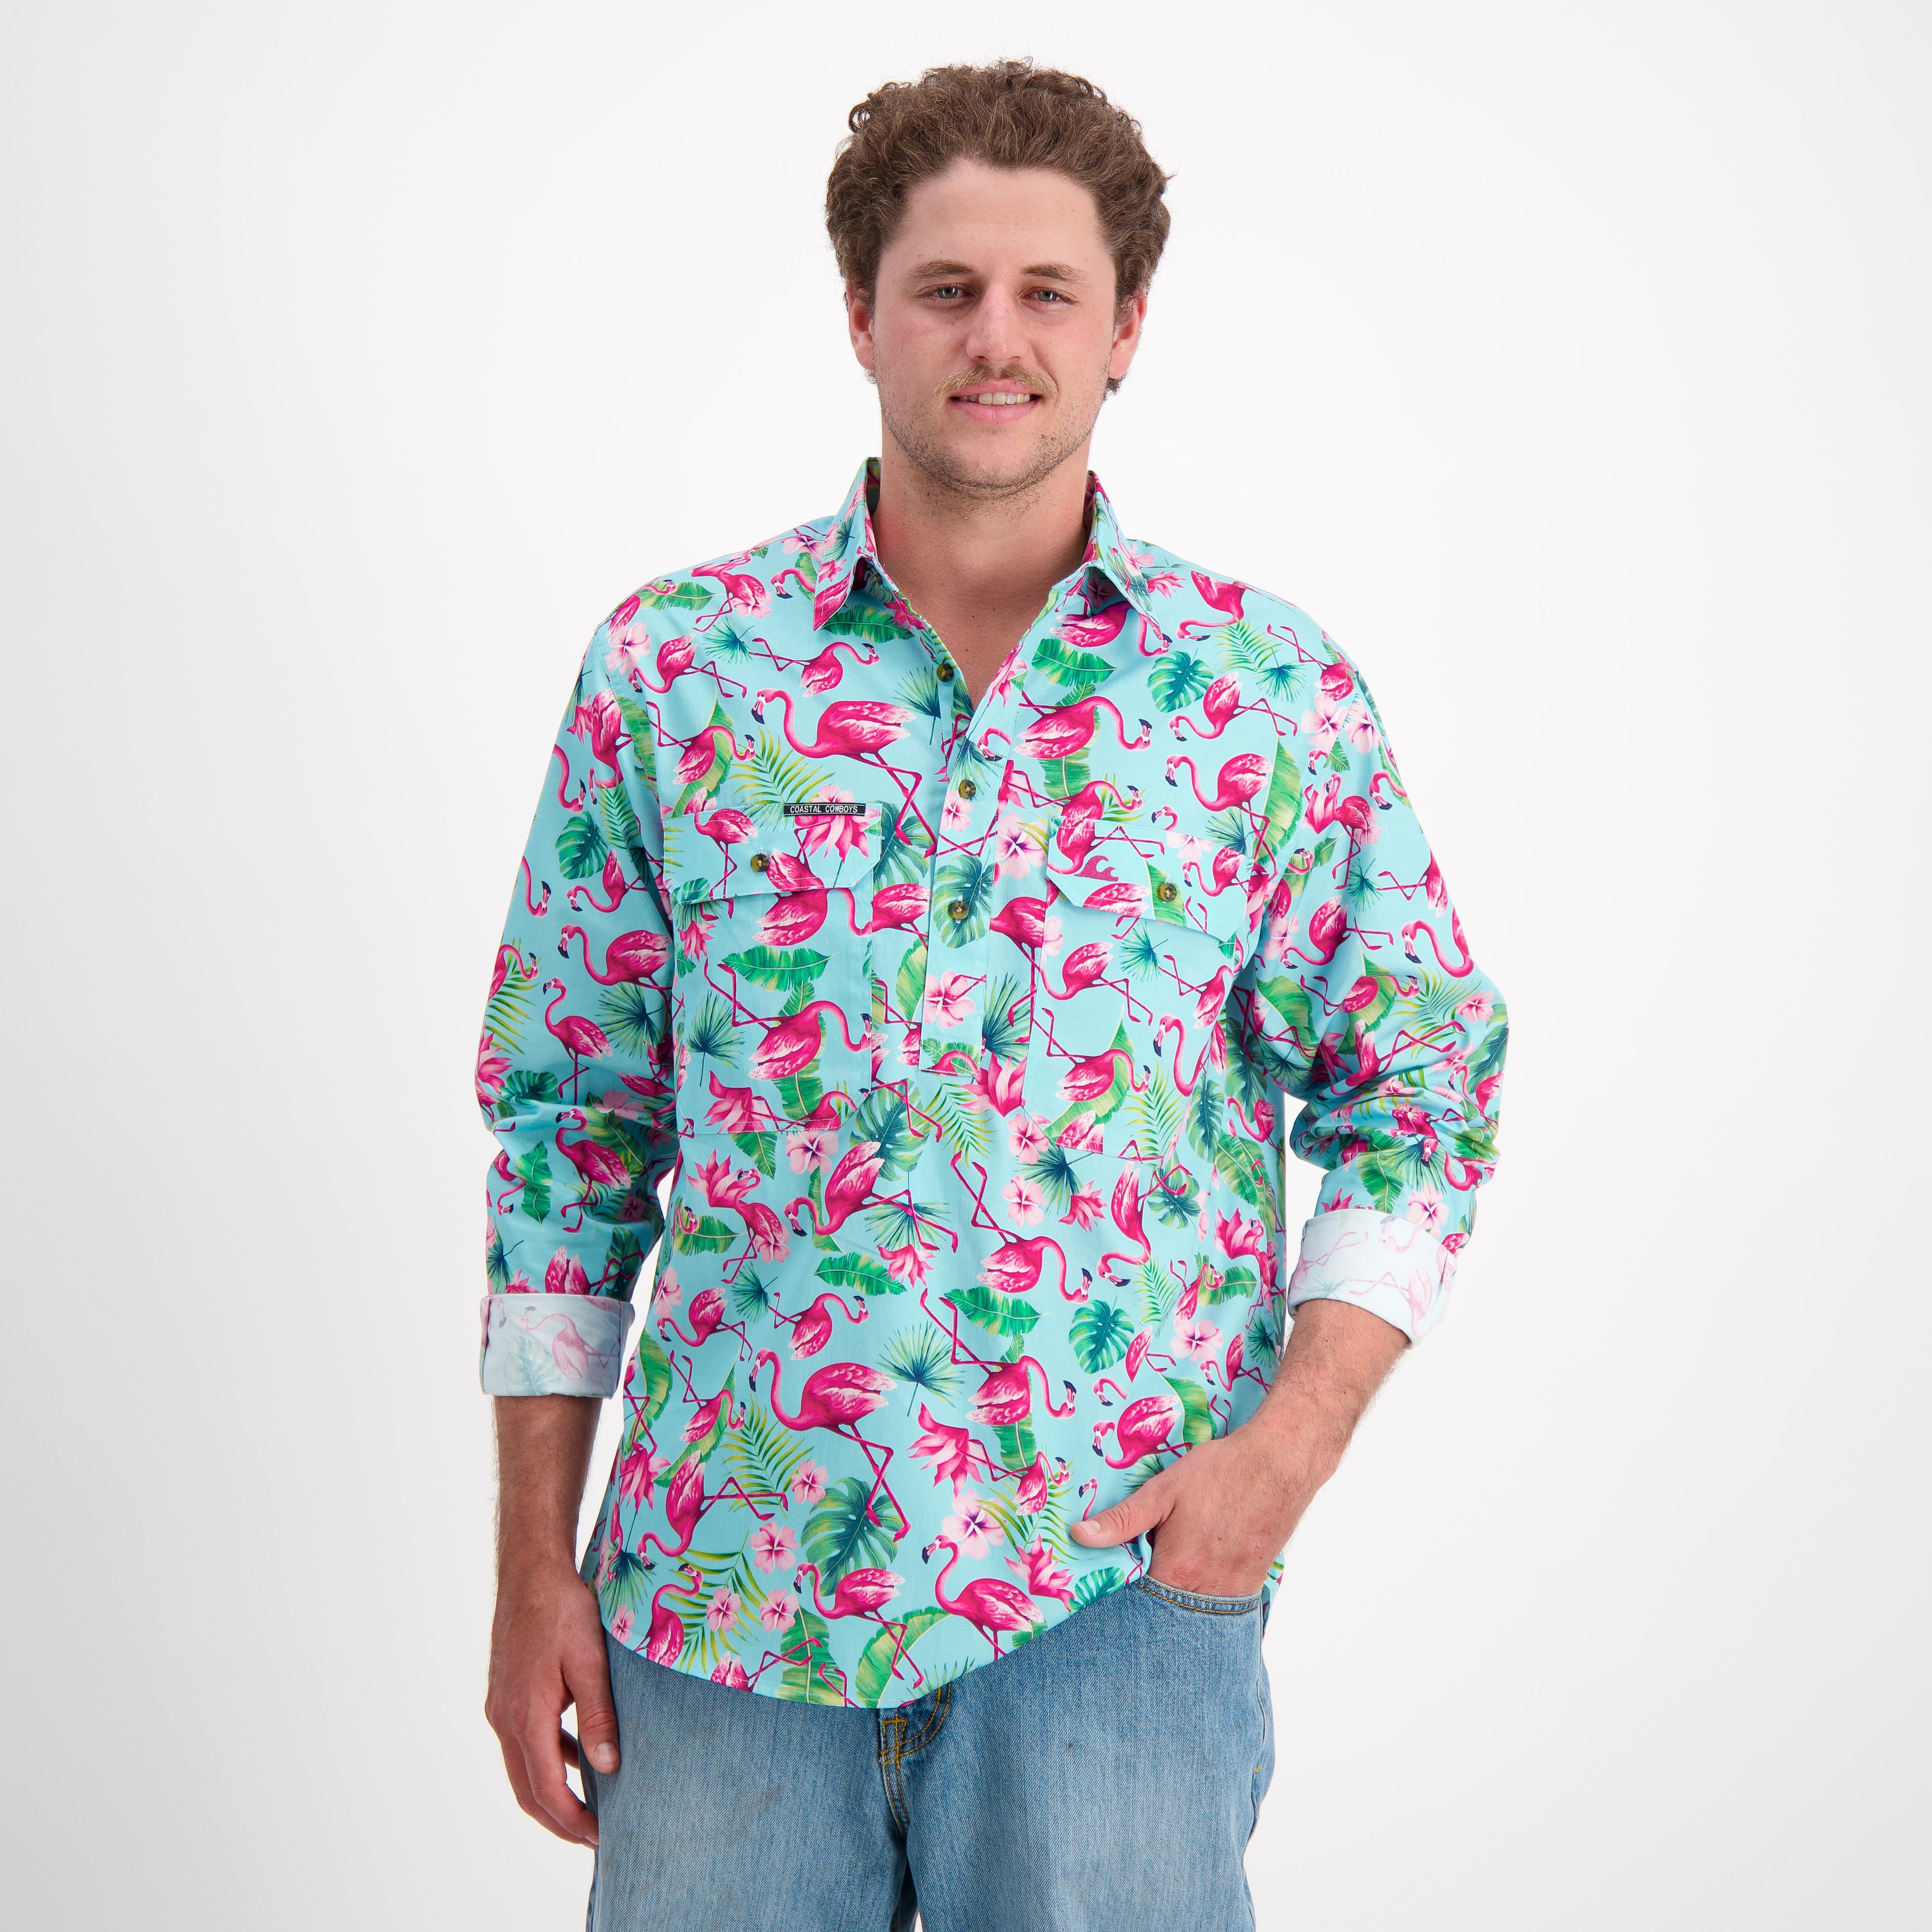 Flamingo work shirt